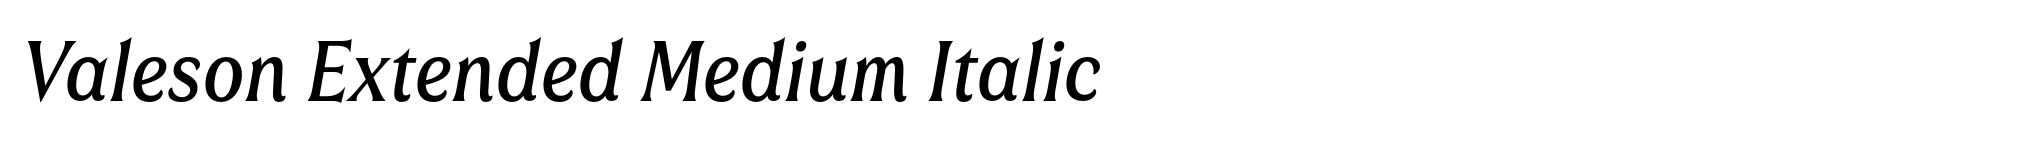 Valeson Extended Medium Italic image